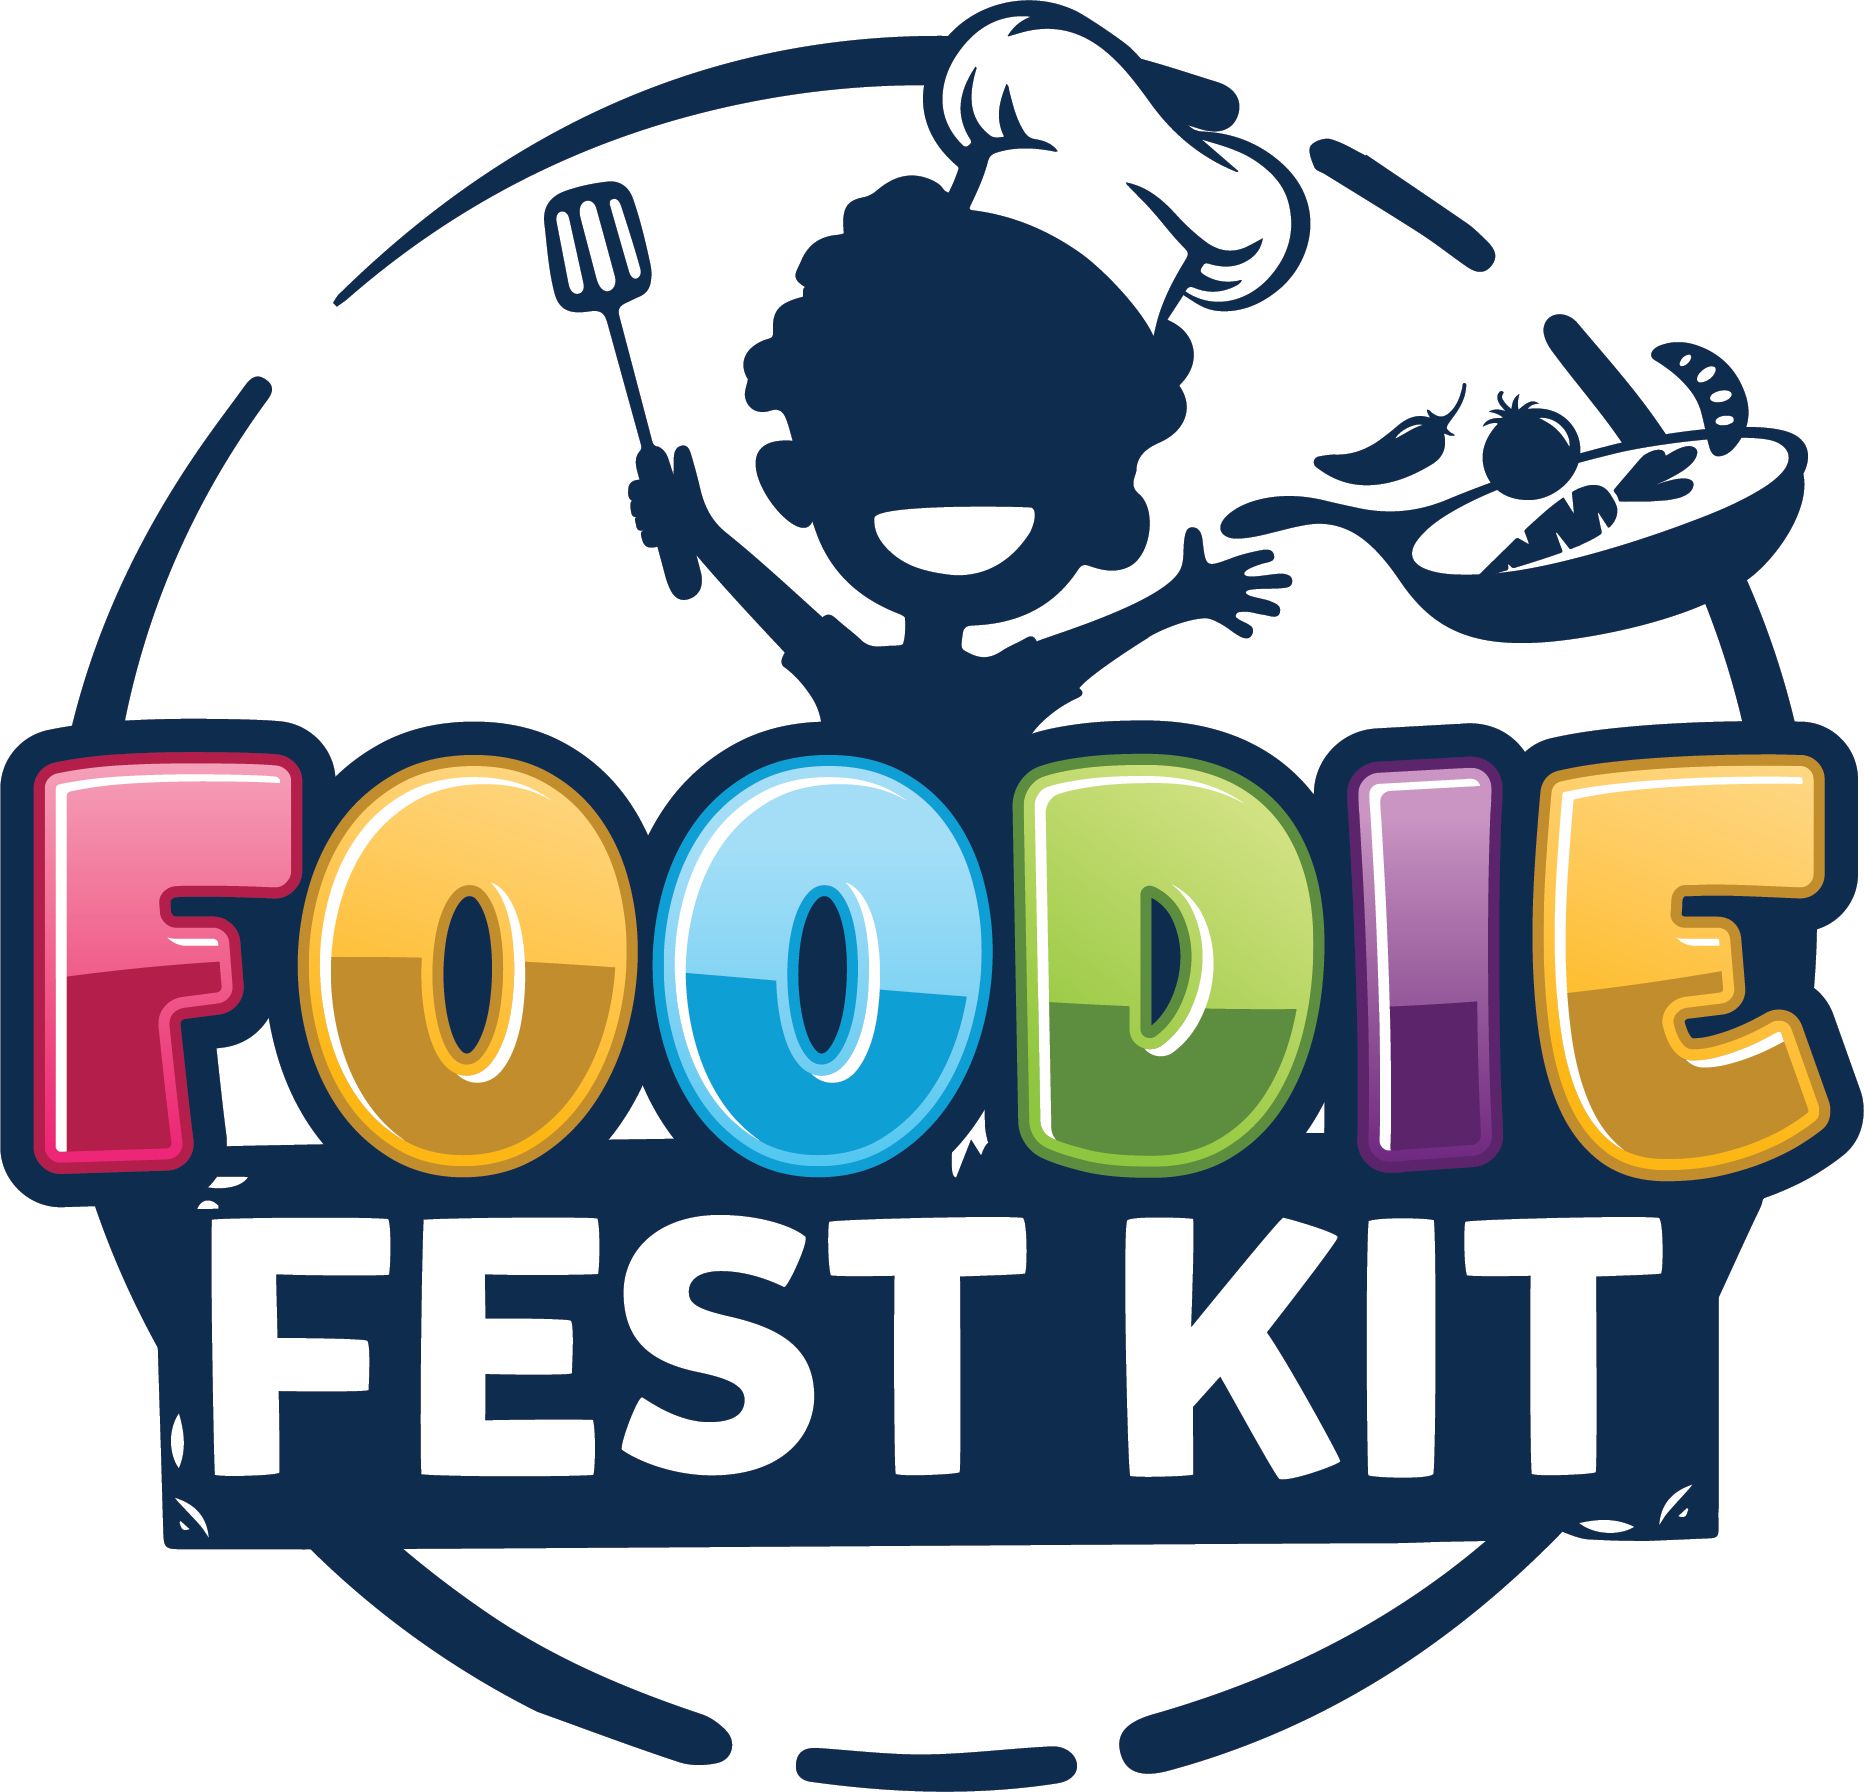 Foodie Fest Kit!